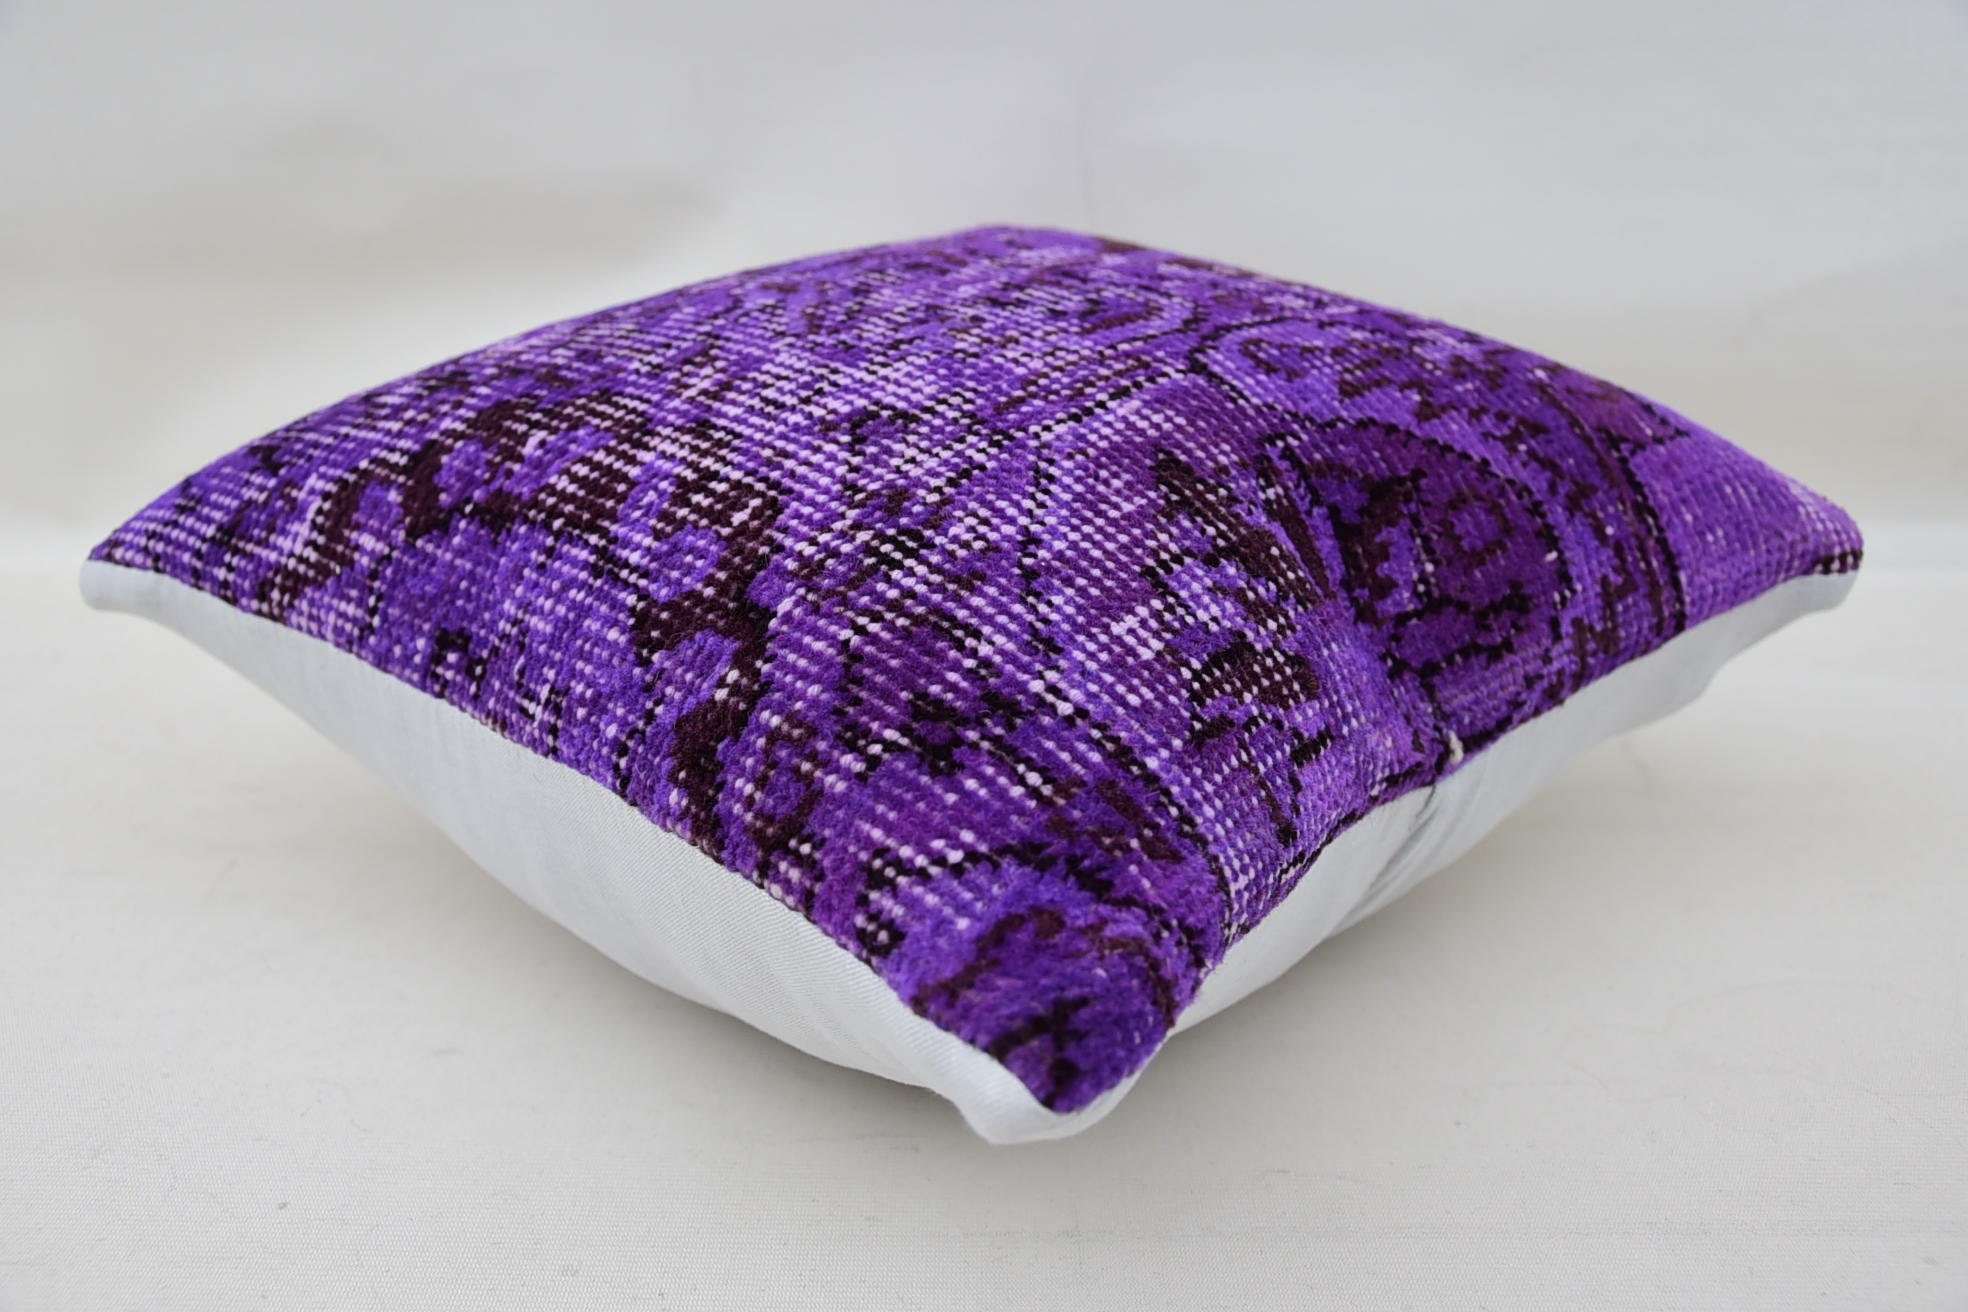 Vintage Kilim Throw Pillow, Ethnic Throw Pillow Sham, 14"x14" Purple Pillow, Pillow for Couch, Retro Pillow Cover, Antique Pillows